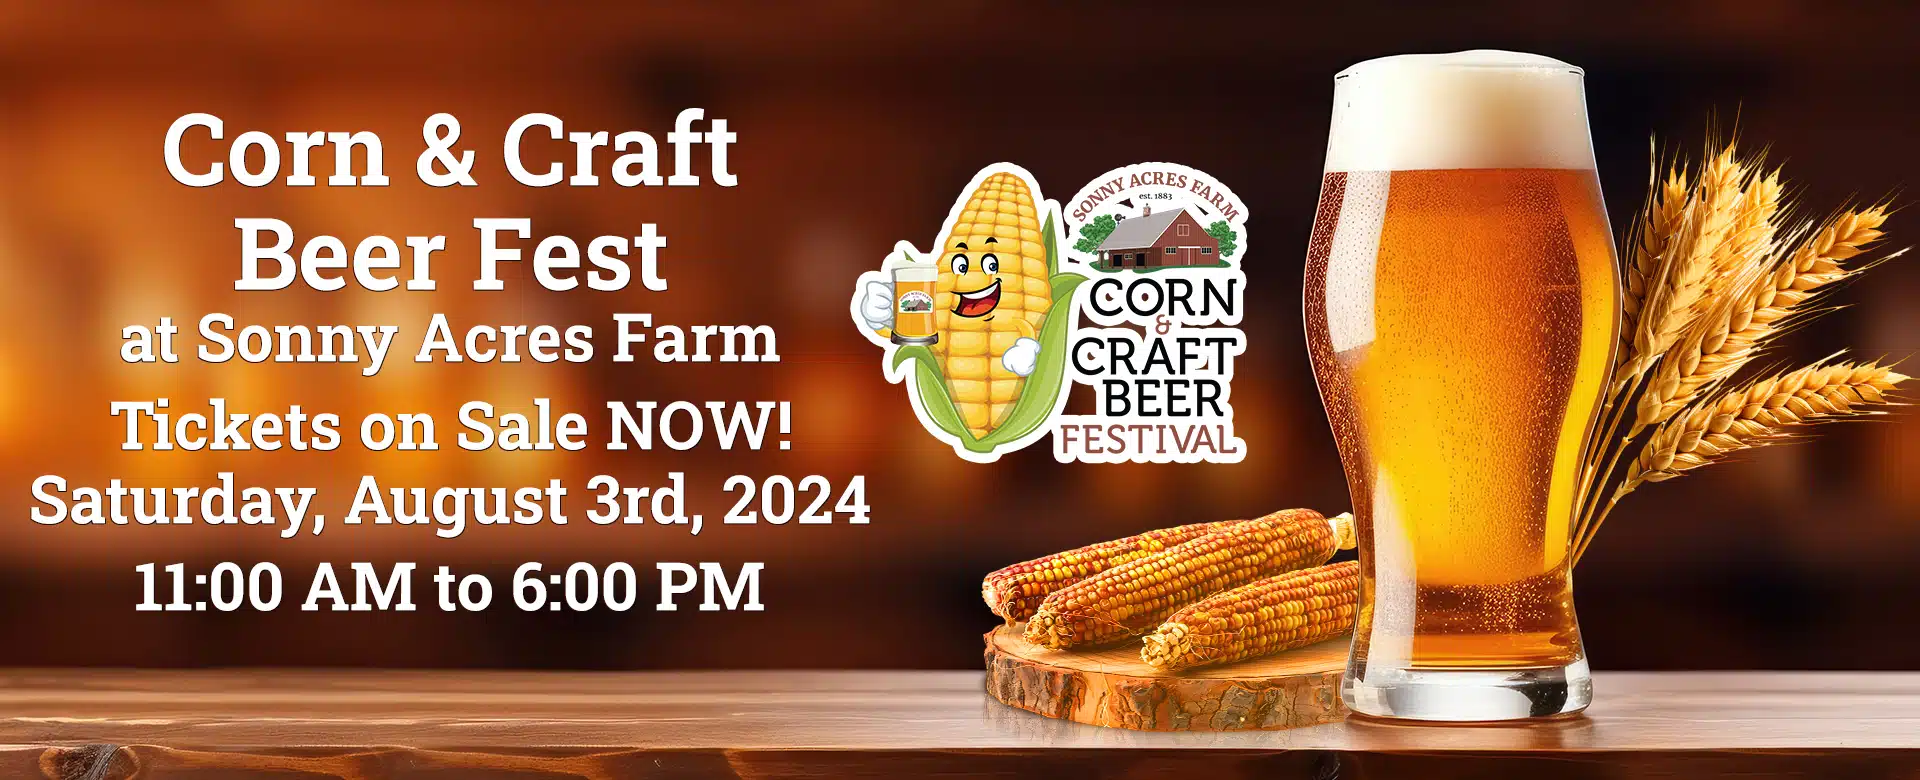 corn-&-craft-beer-fest-2024-sonny-acres-farm-2